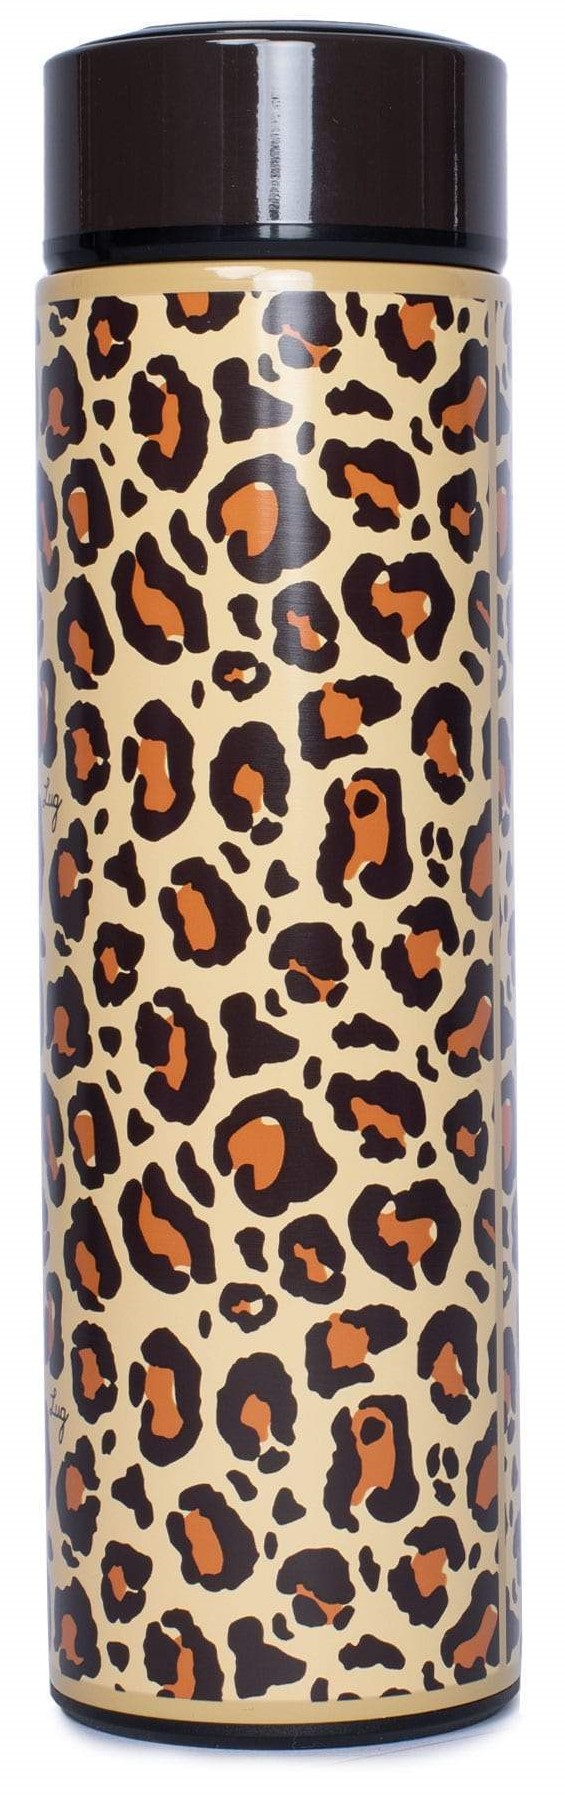 LUG - Chuggie - Insulated Bottle 16oz - Leopard Brown